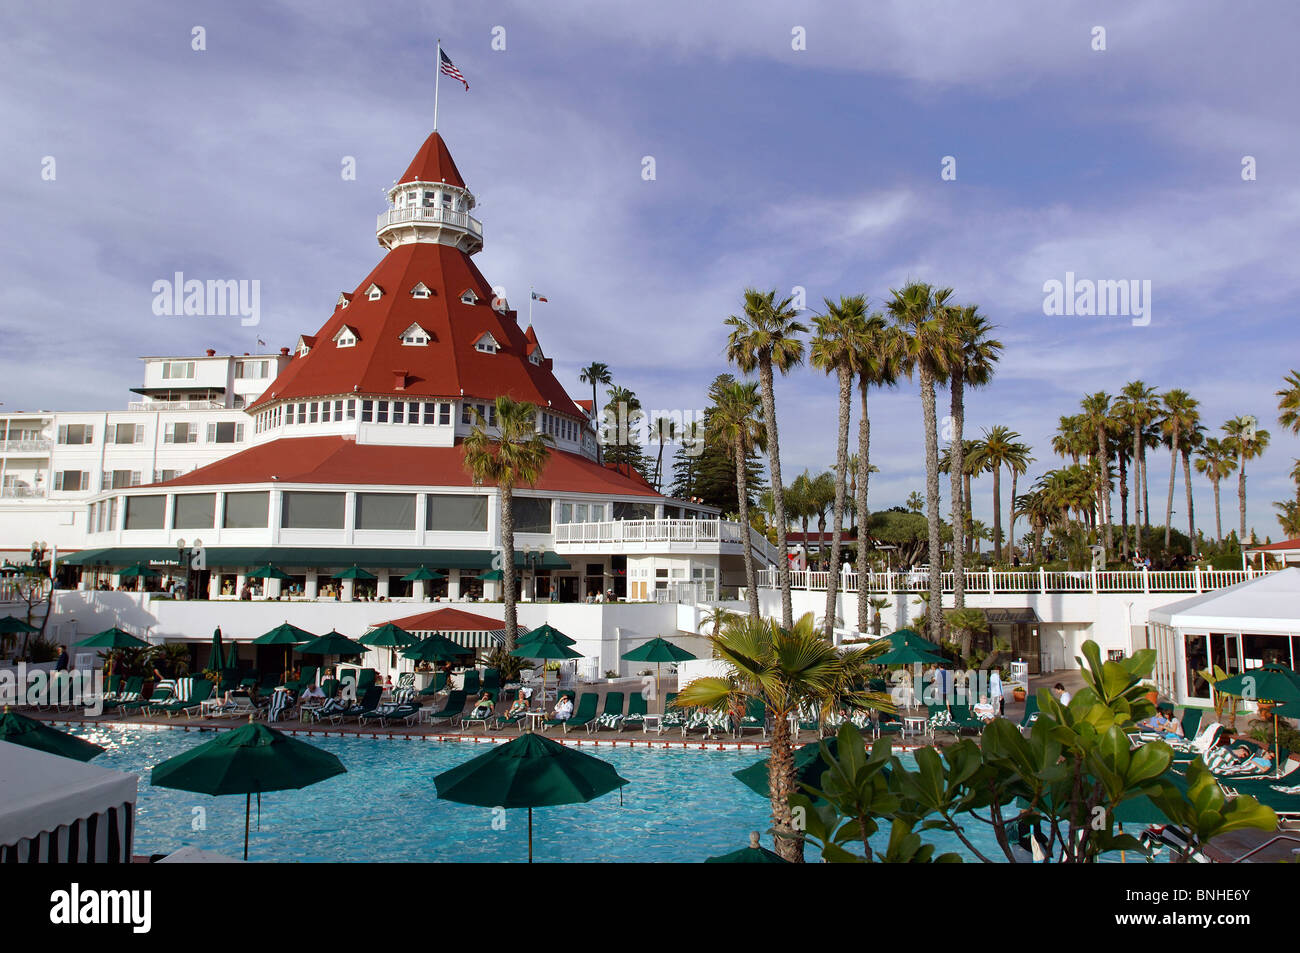 Usa San Diego California Hotel Del Coronado Coronado Beach Swimming Pool Tourism Resort Palm Resort United States of America Stock Photo